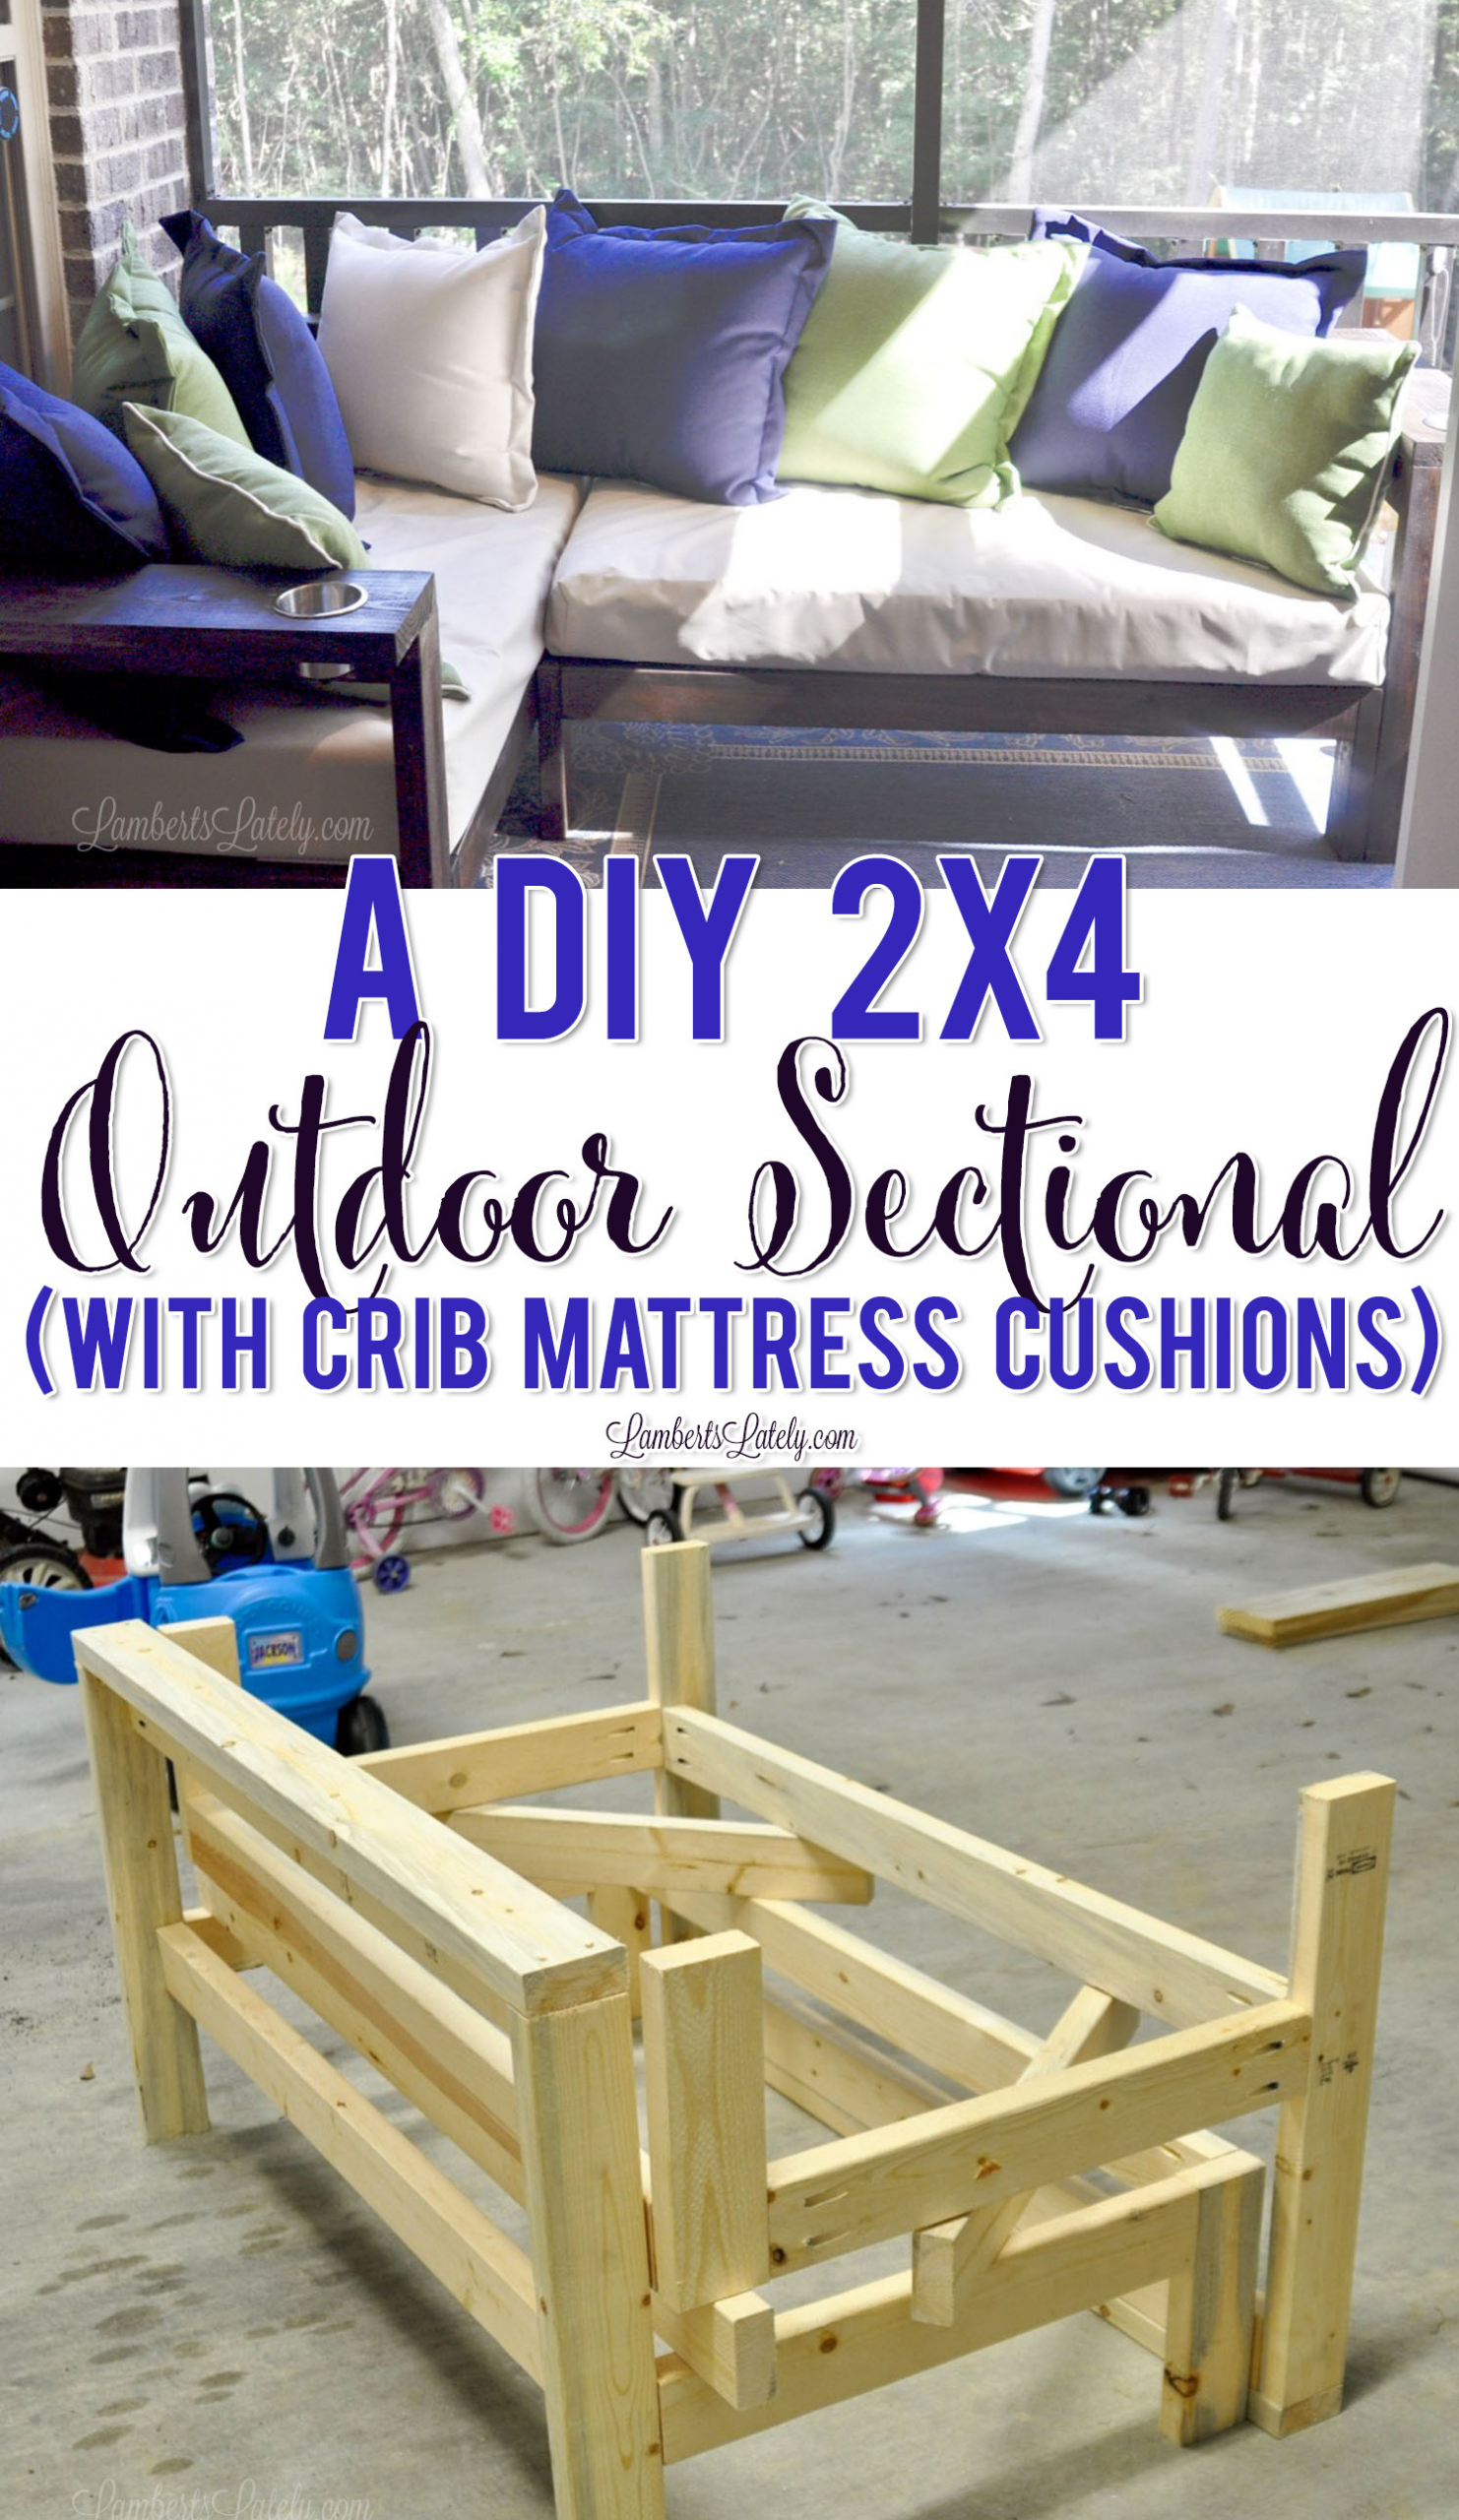 DIY Outdoor Sofa Cushions
 A DIY 2x4 Outdoor Sectional with Crib Mattress Cushions